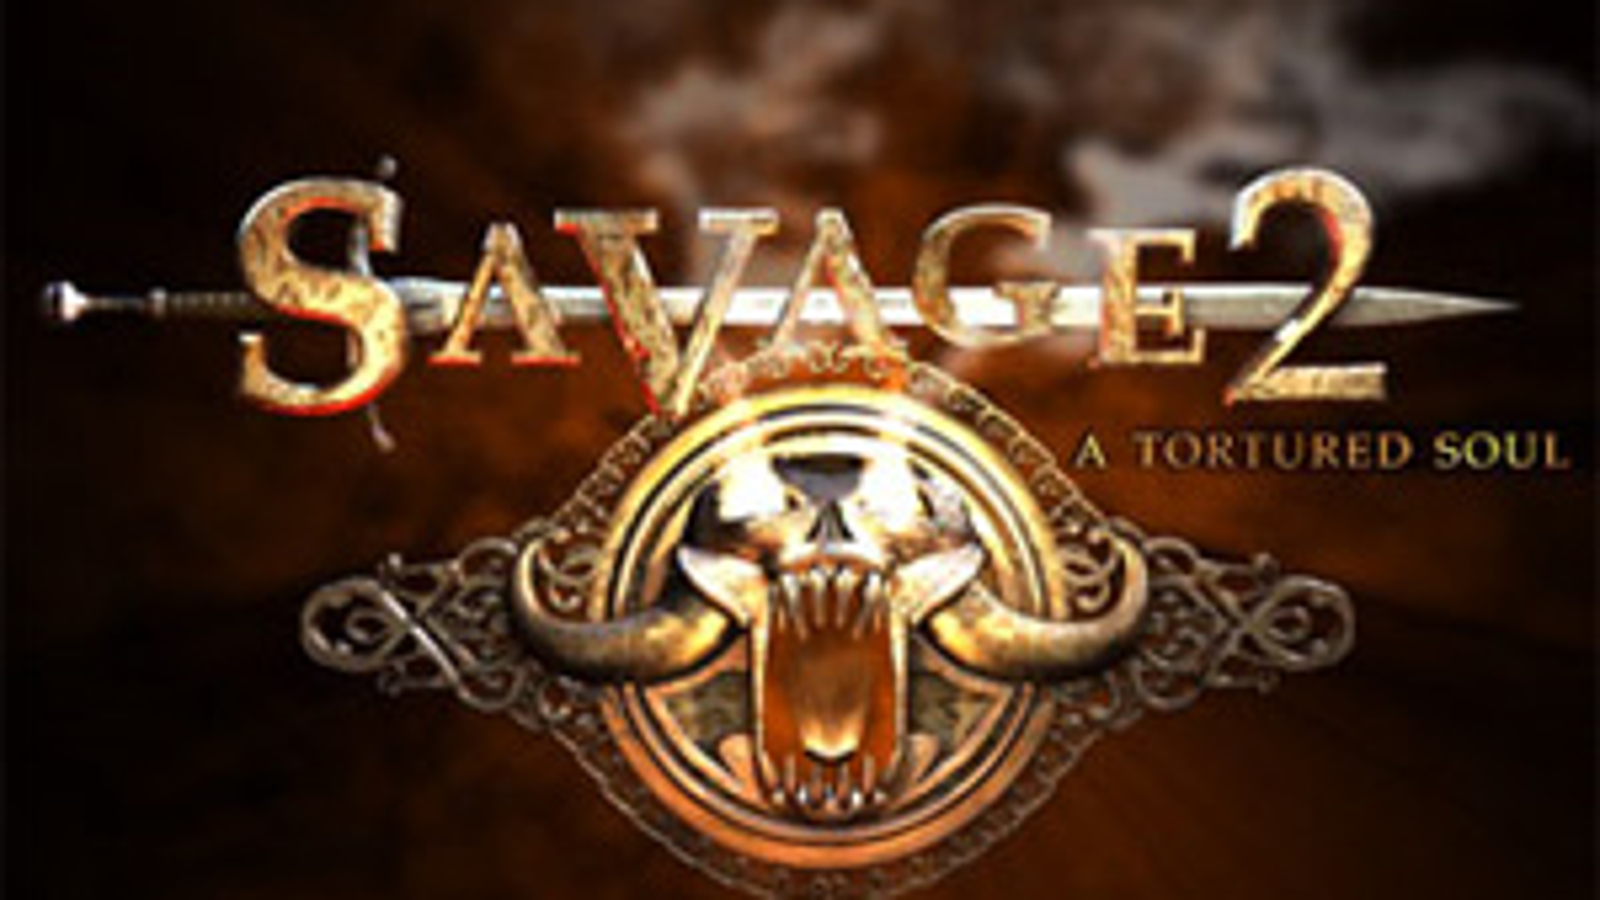 savage 2 a tortured soul still alive